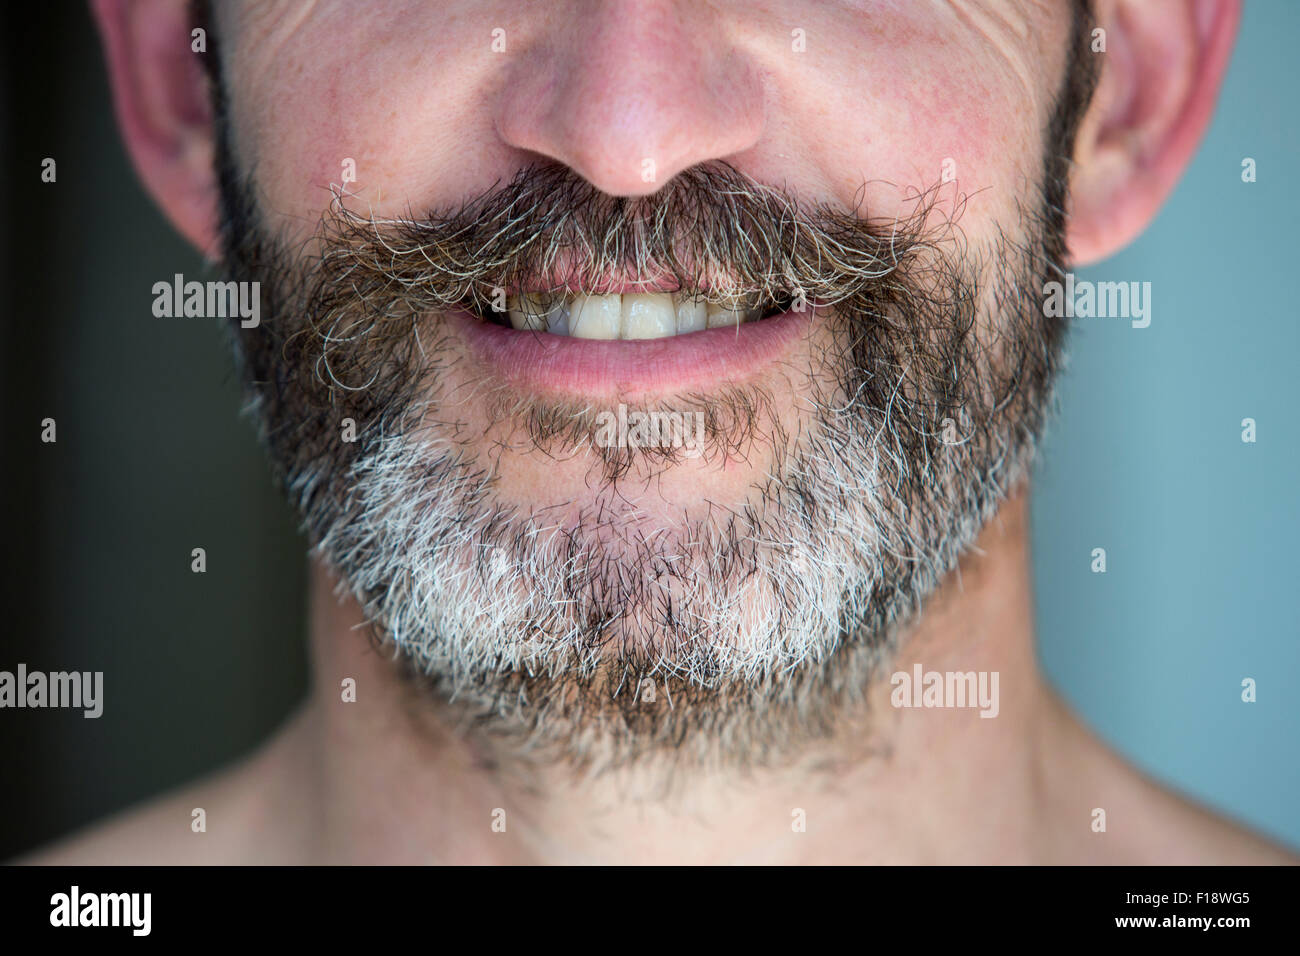 Closeup of a smiling man avec barbe complète Banque D'Images